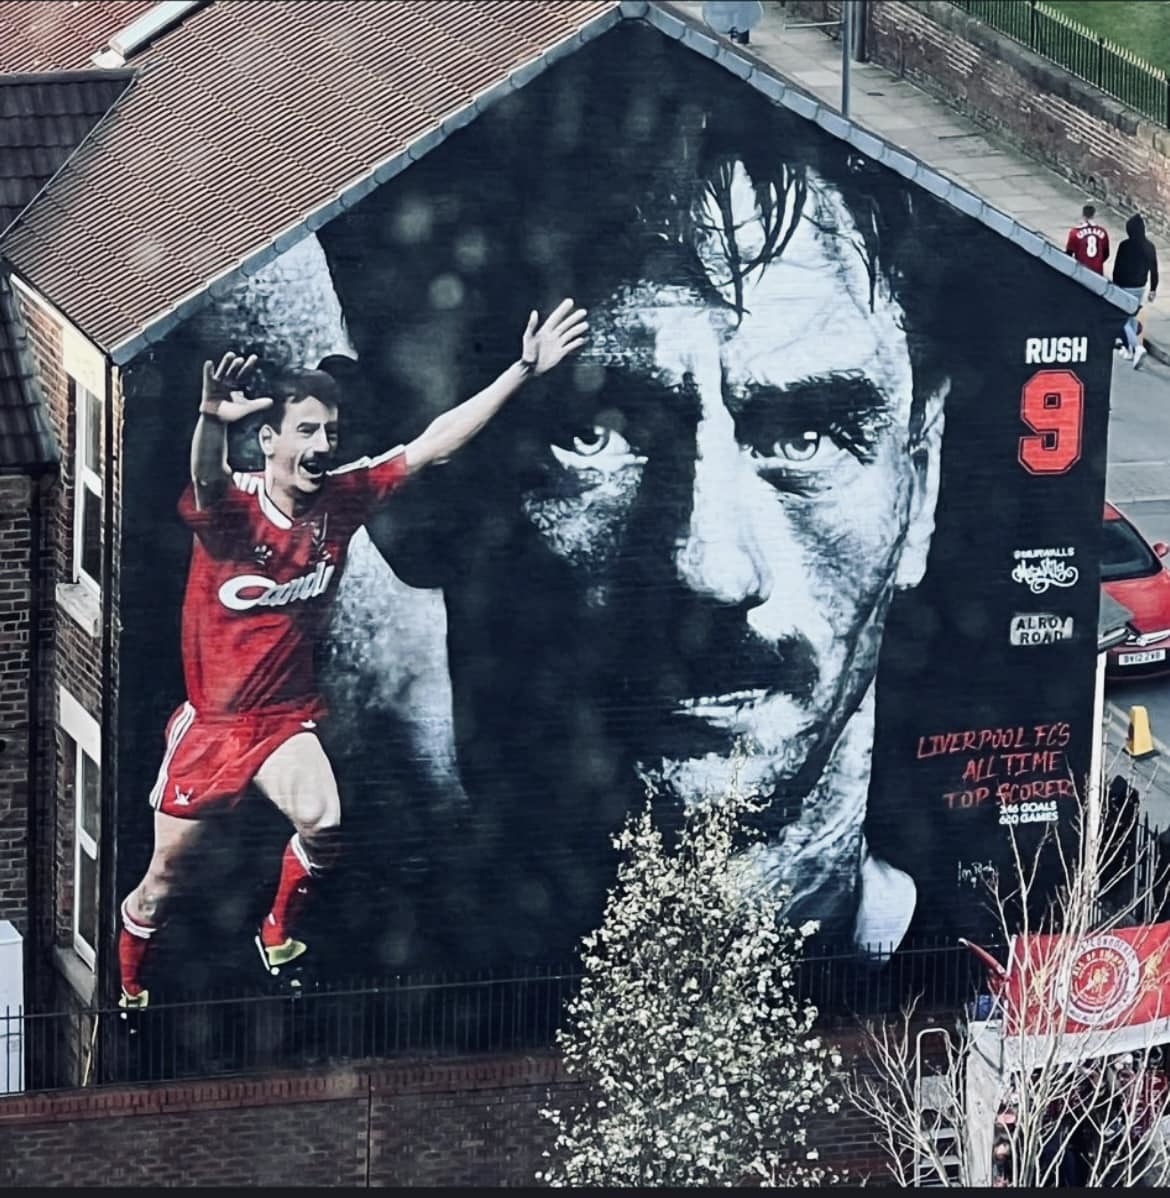 Liverpool. Picture: Sean Hughes